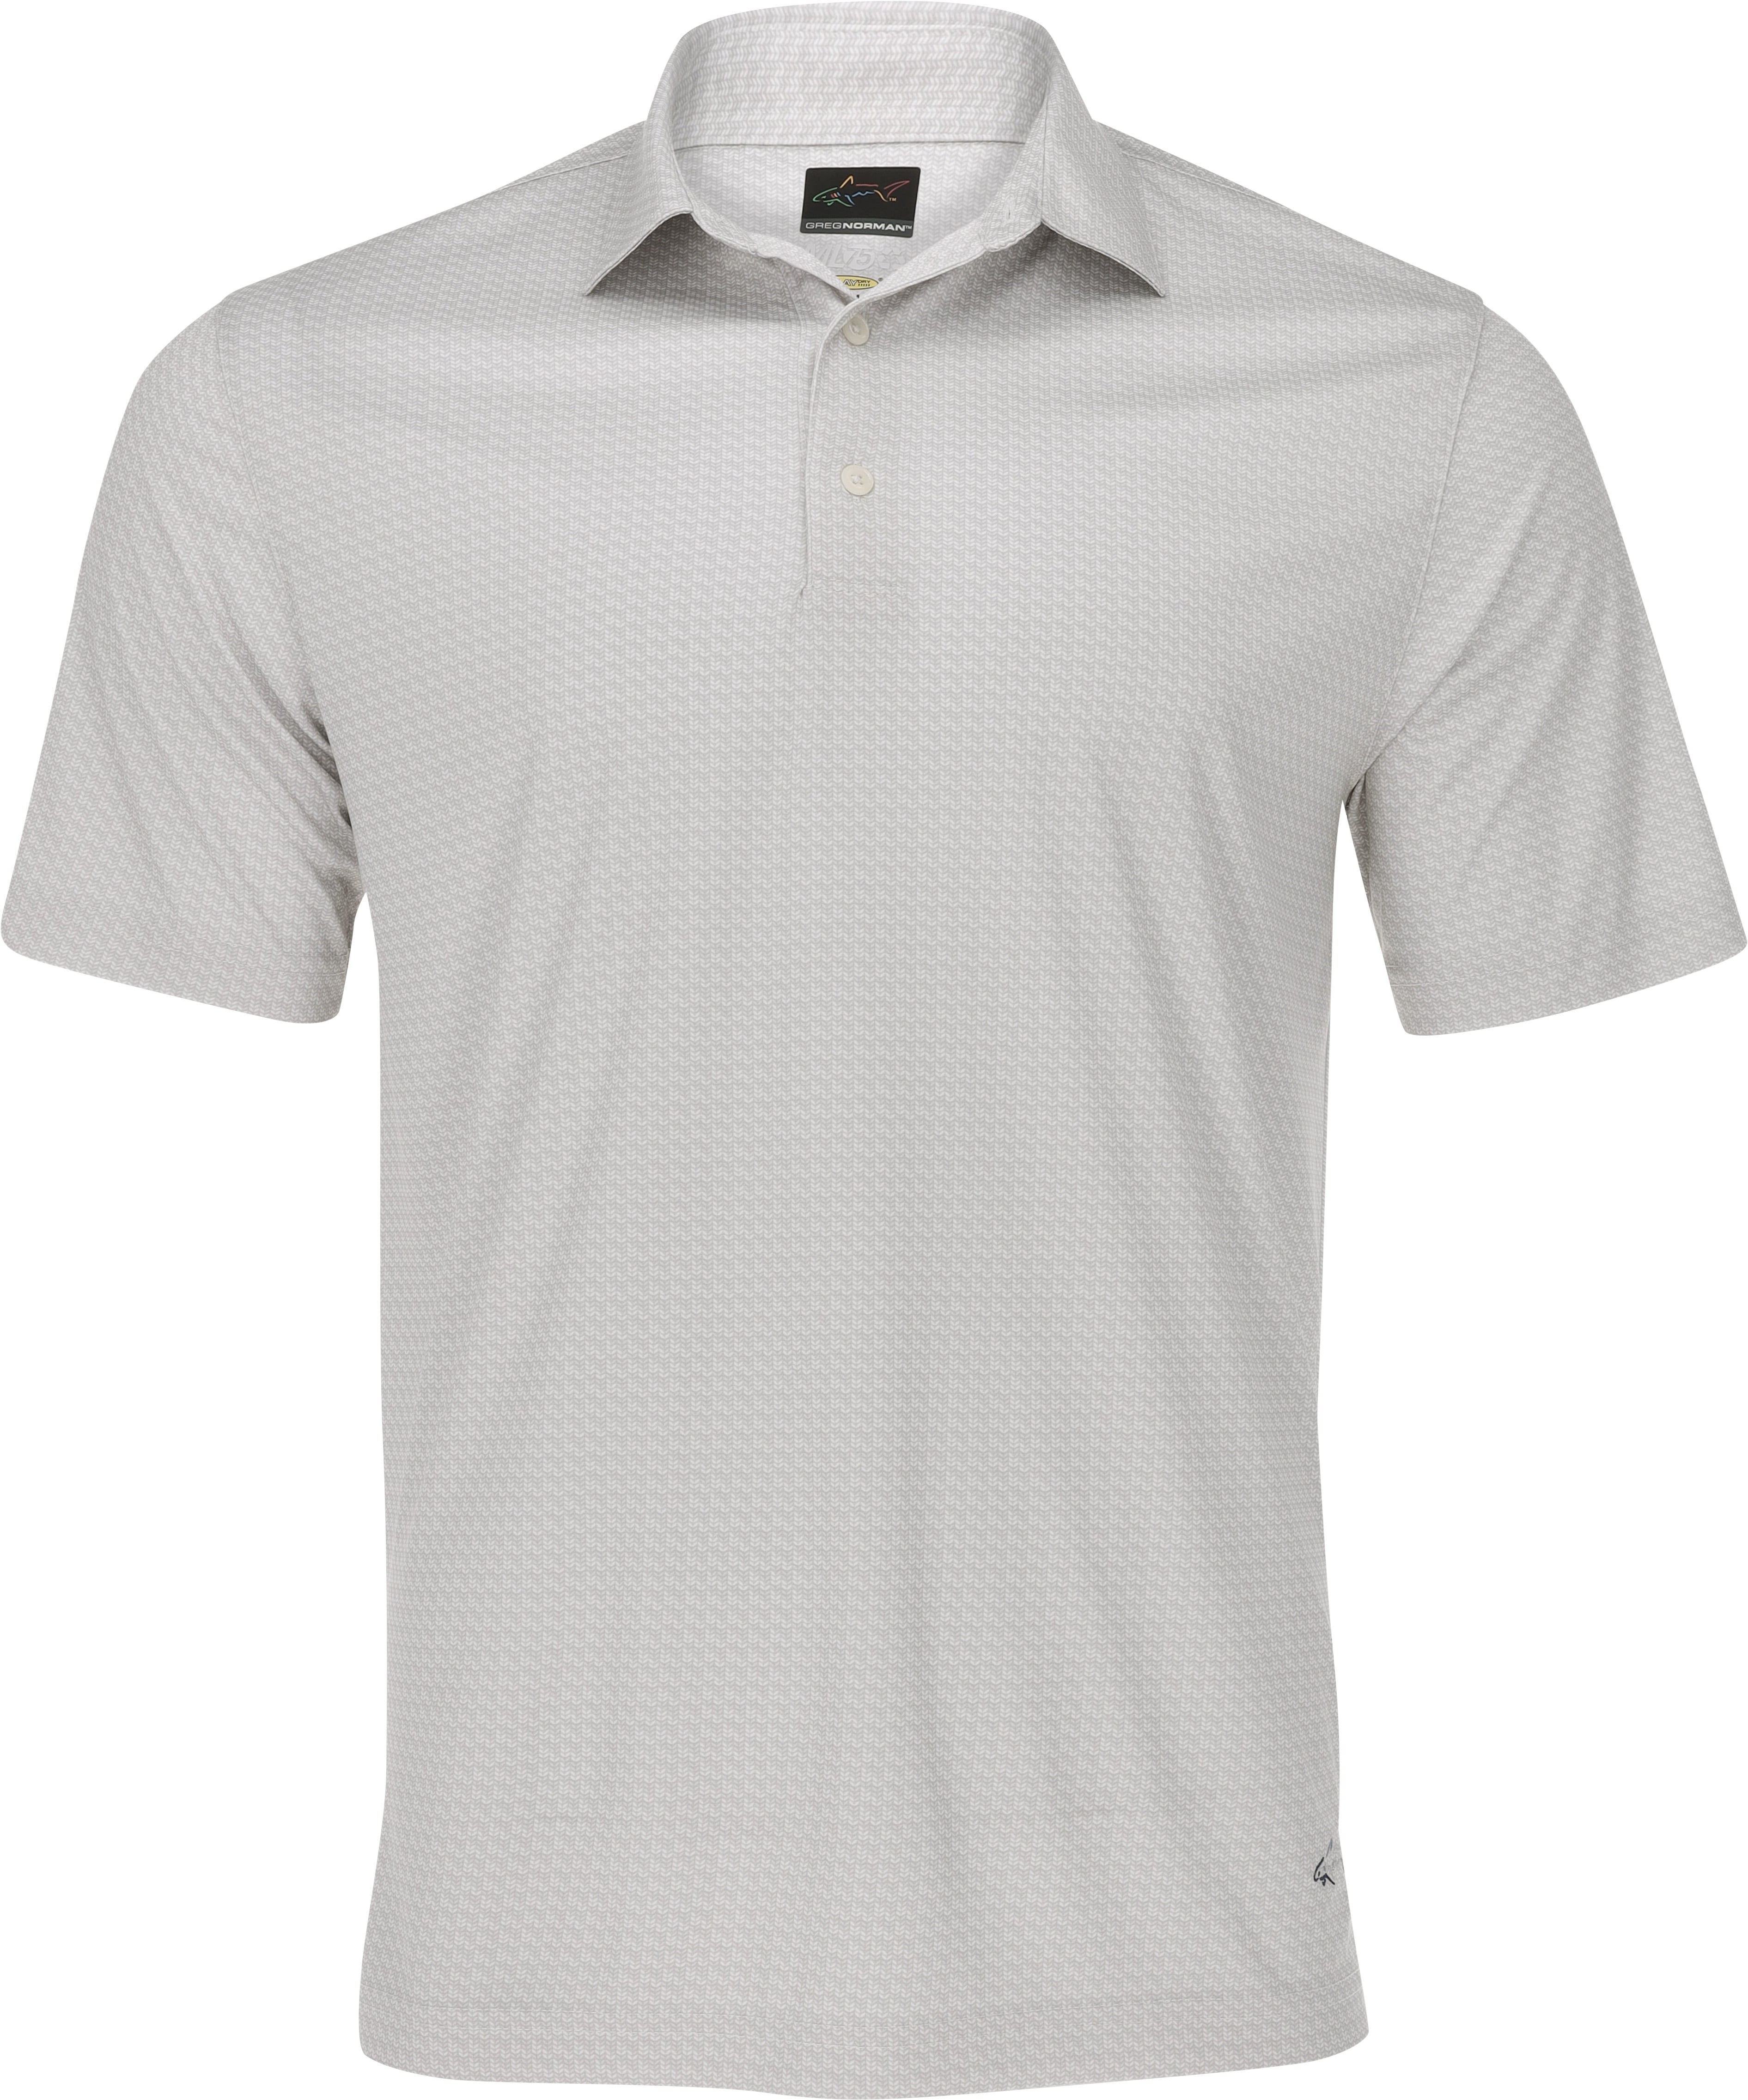 Greg Norman ML75 Microlux Whale Tail Print Shirt Men Polo Short Sleeve ...